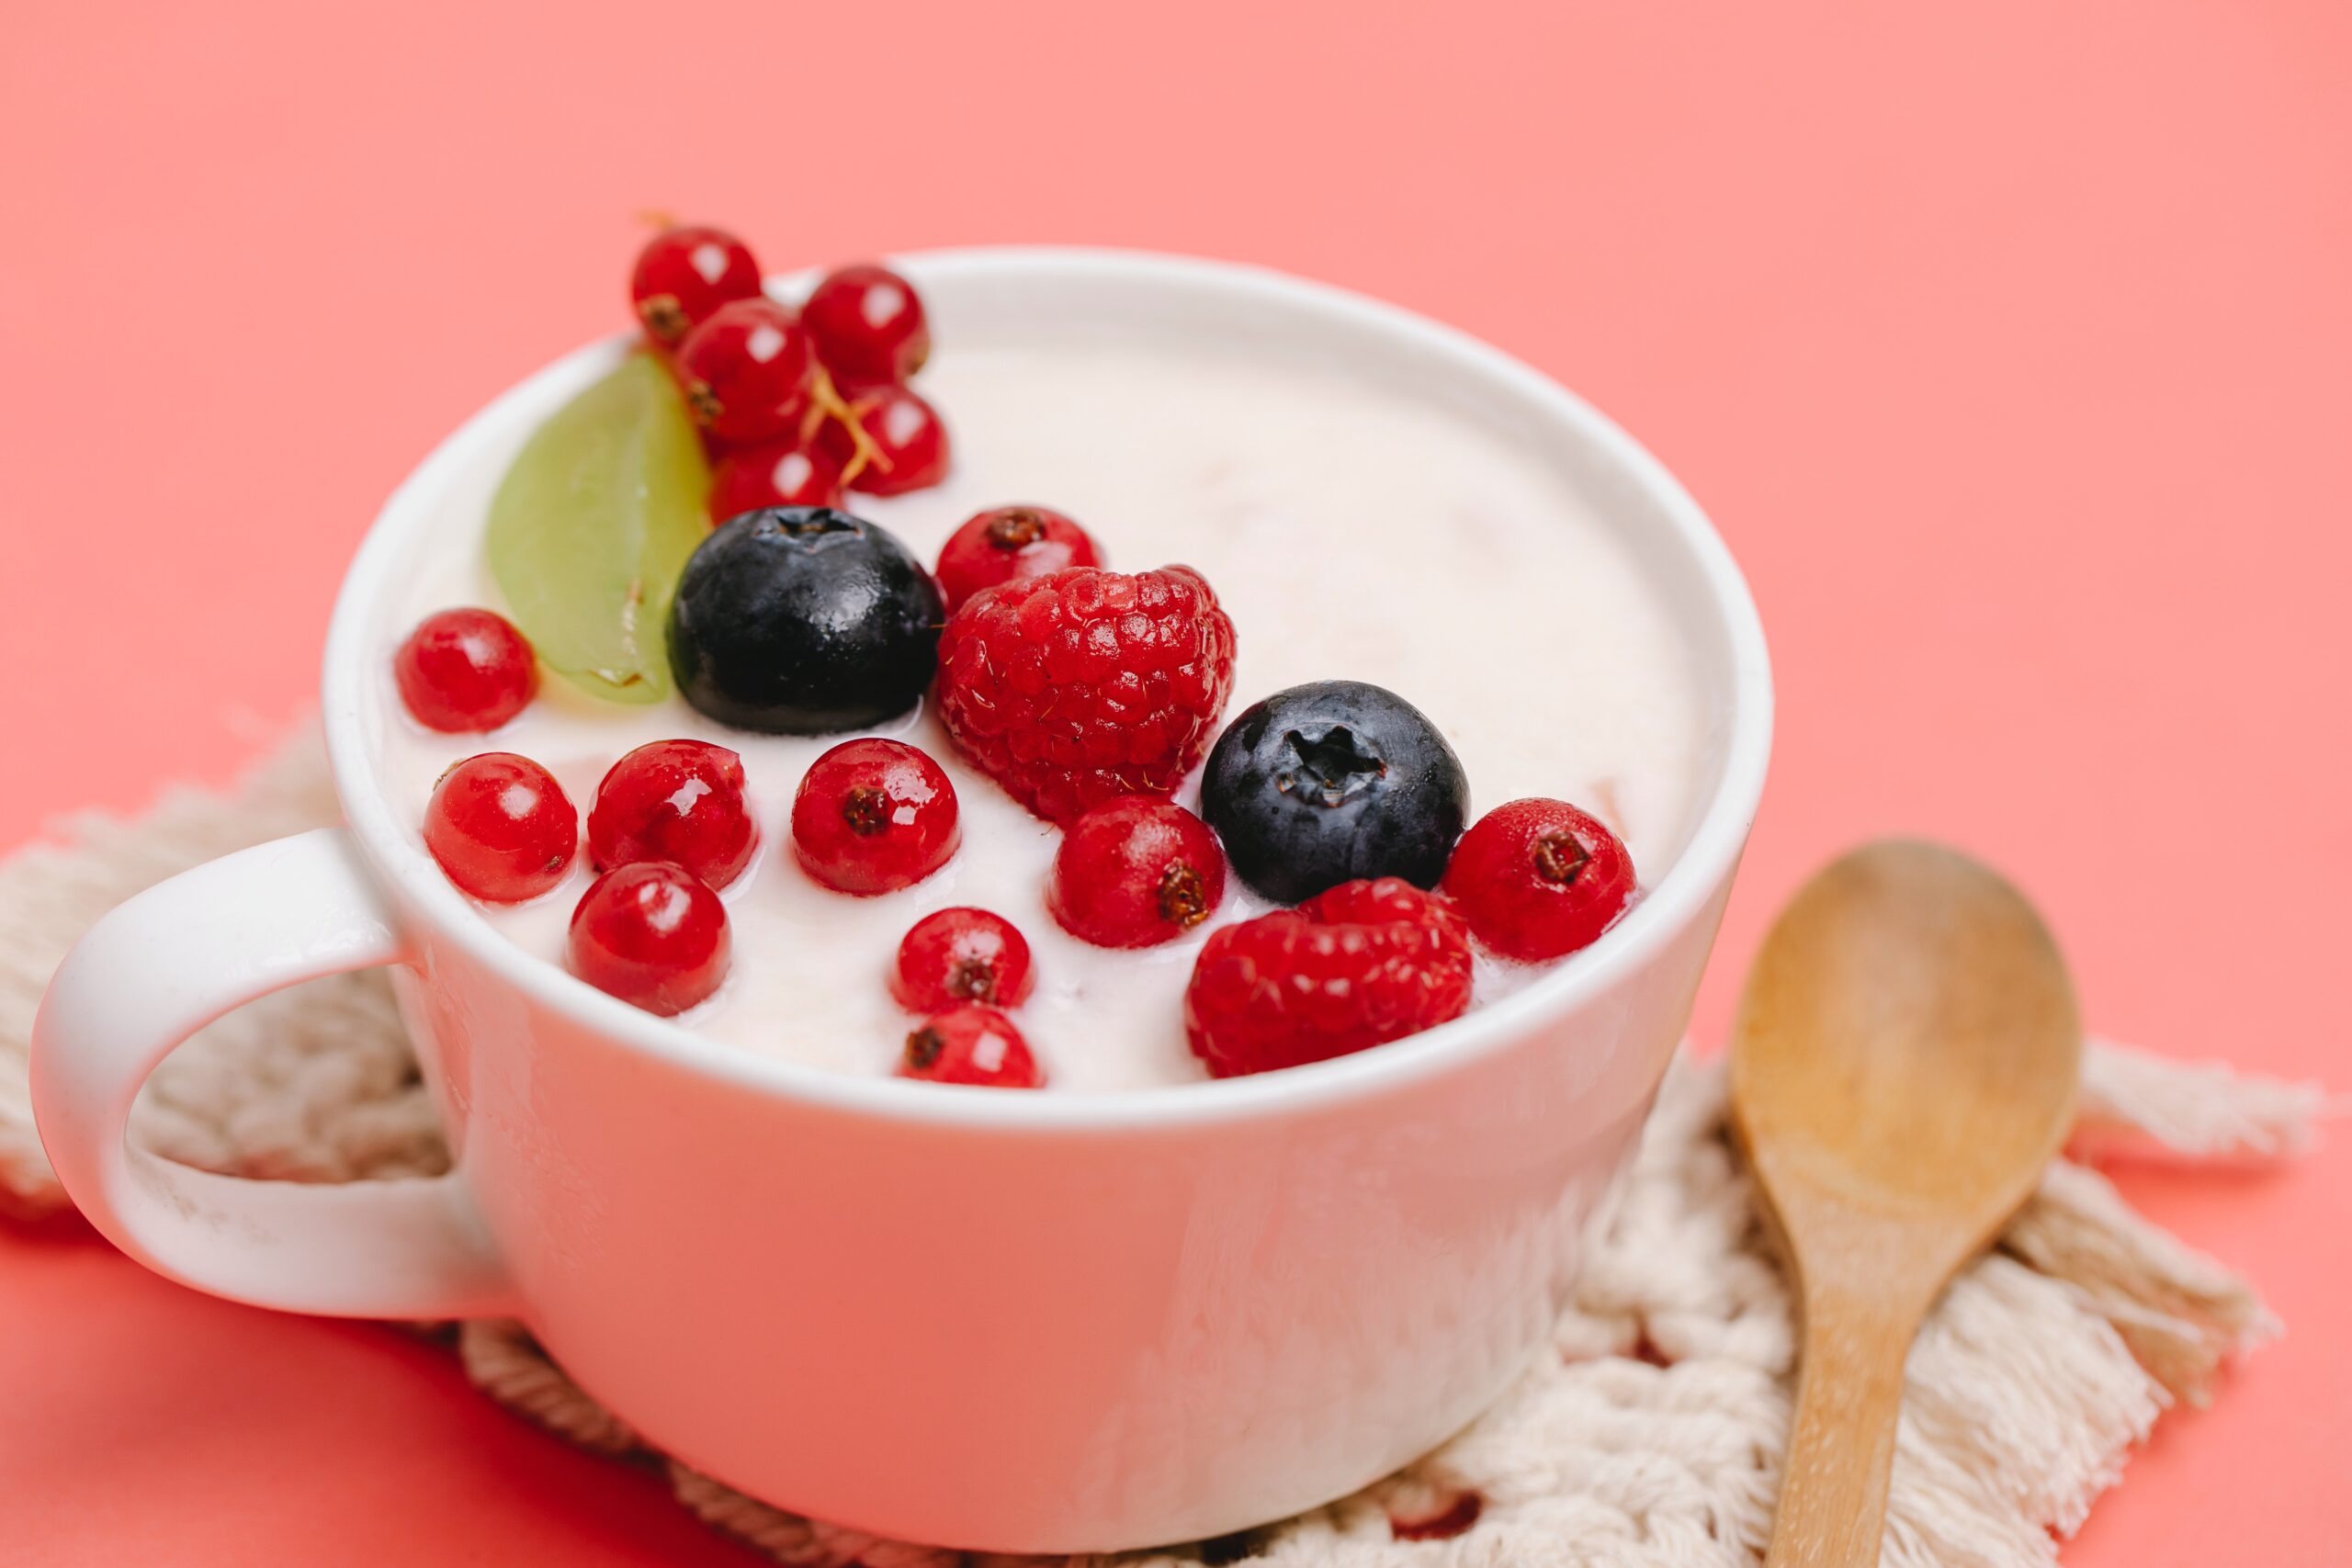 Bowl of yogurt with raspberries, blueberries, and red berries